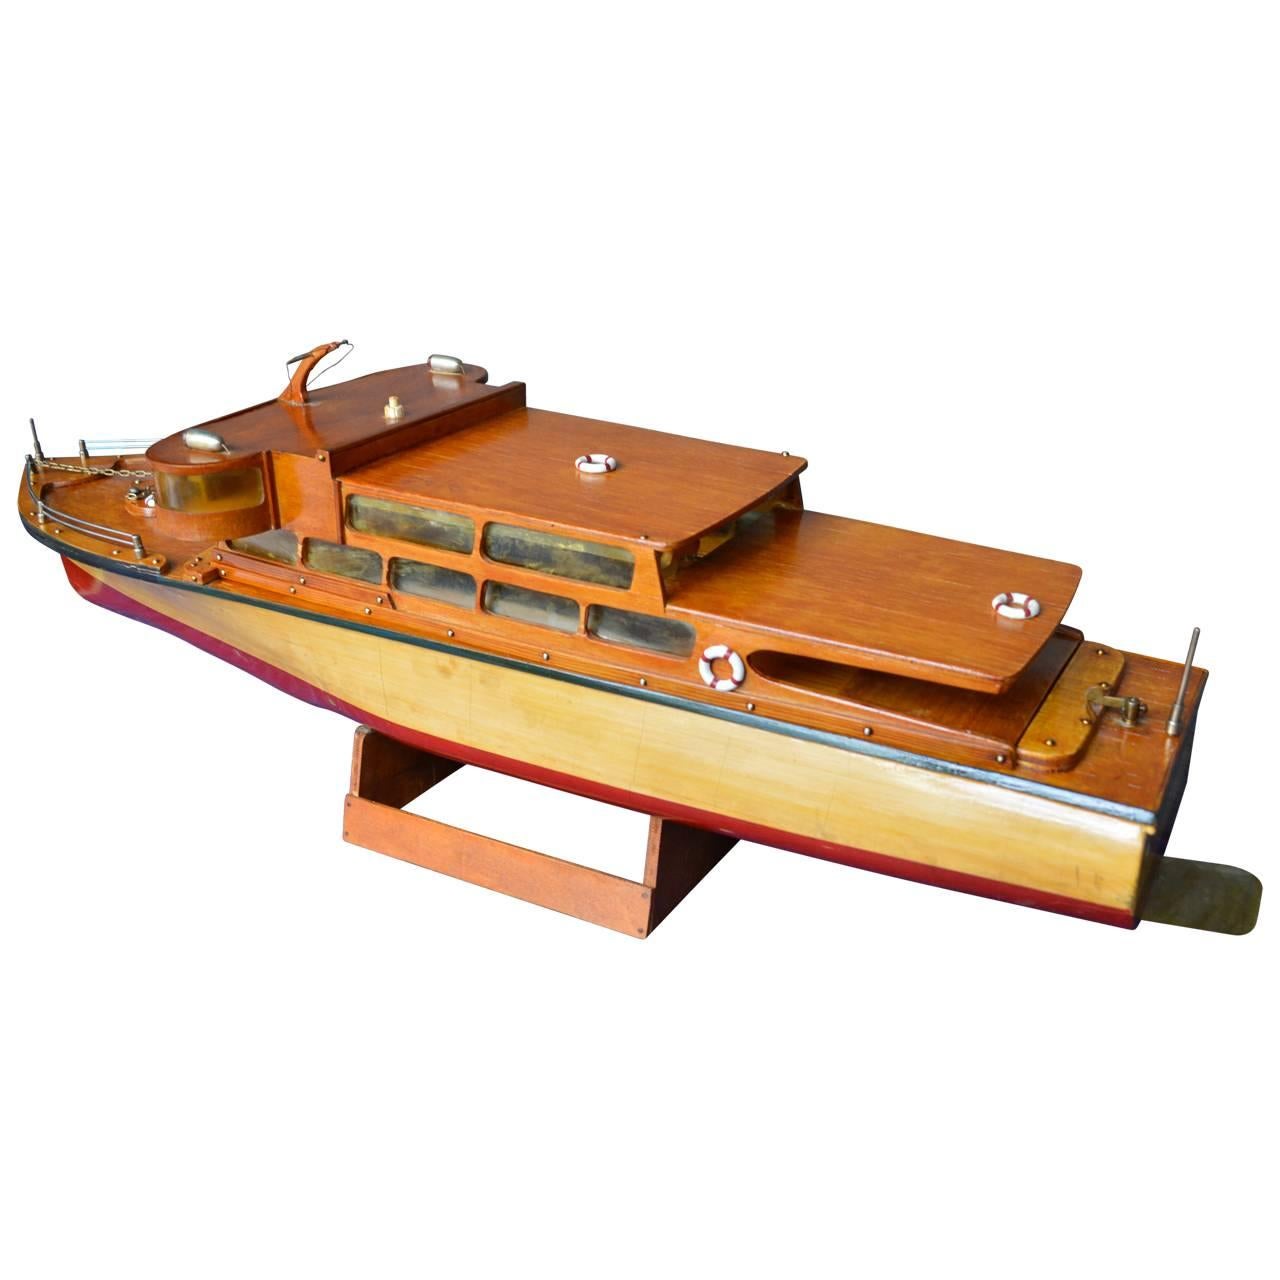 Vintage motorized boat model